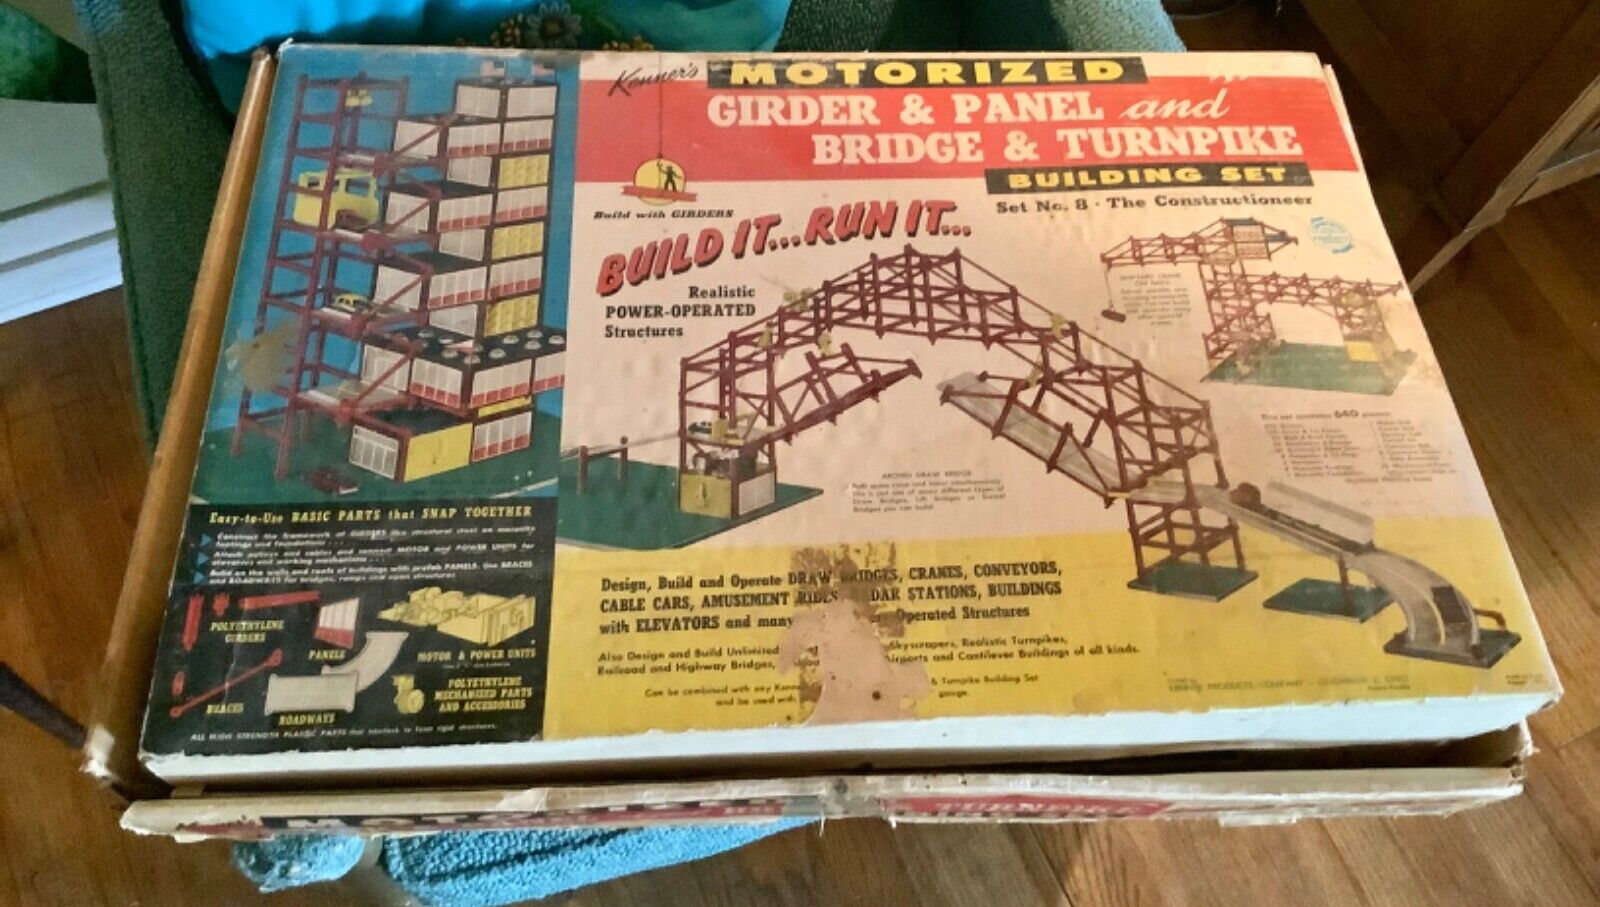 Vintage Kenner’s Girder bridge and city Building Set No. 8 constructioneer 1960